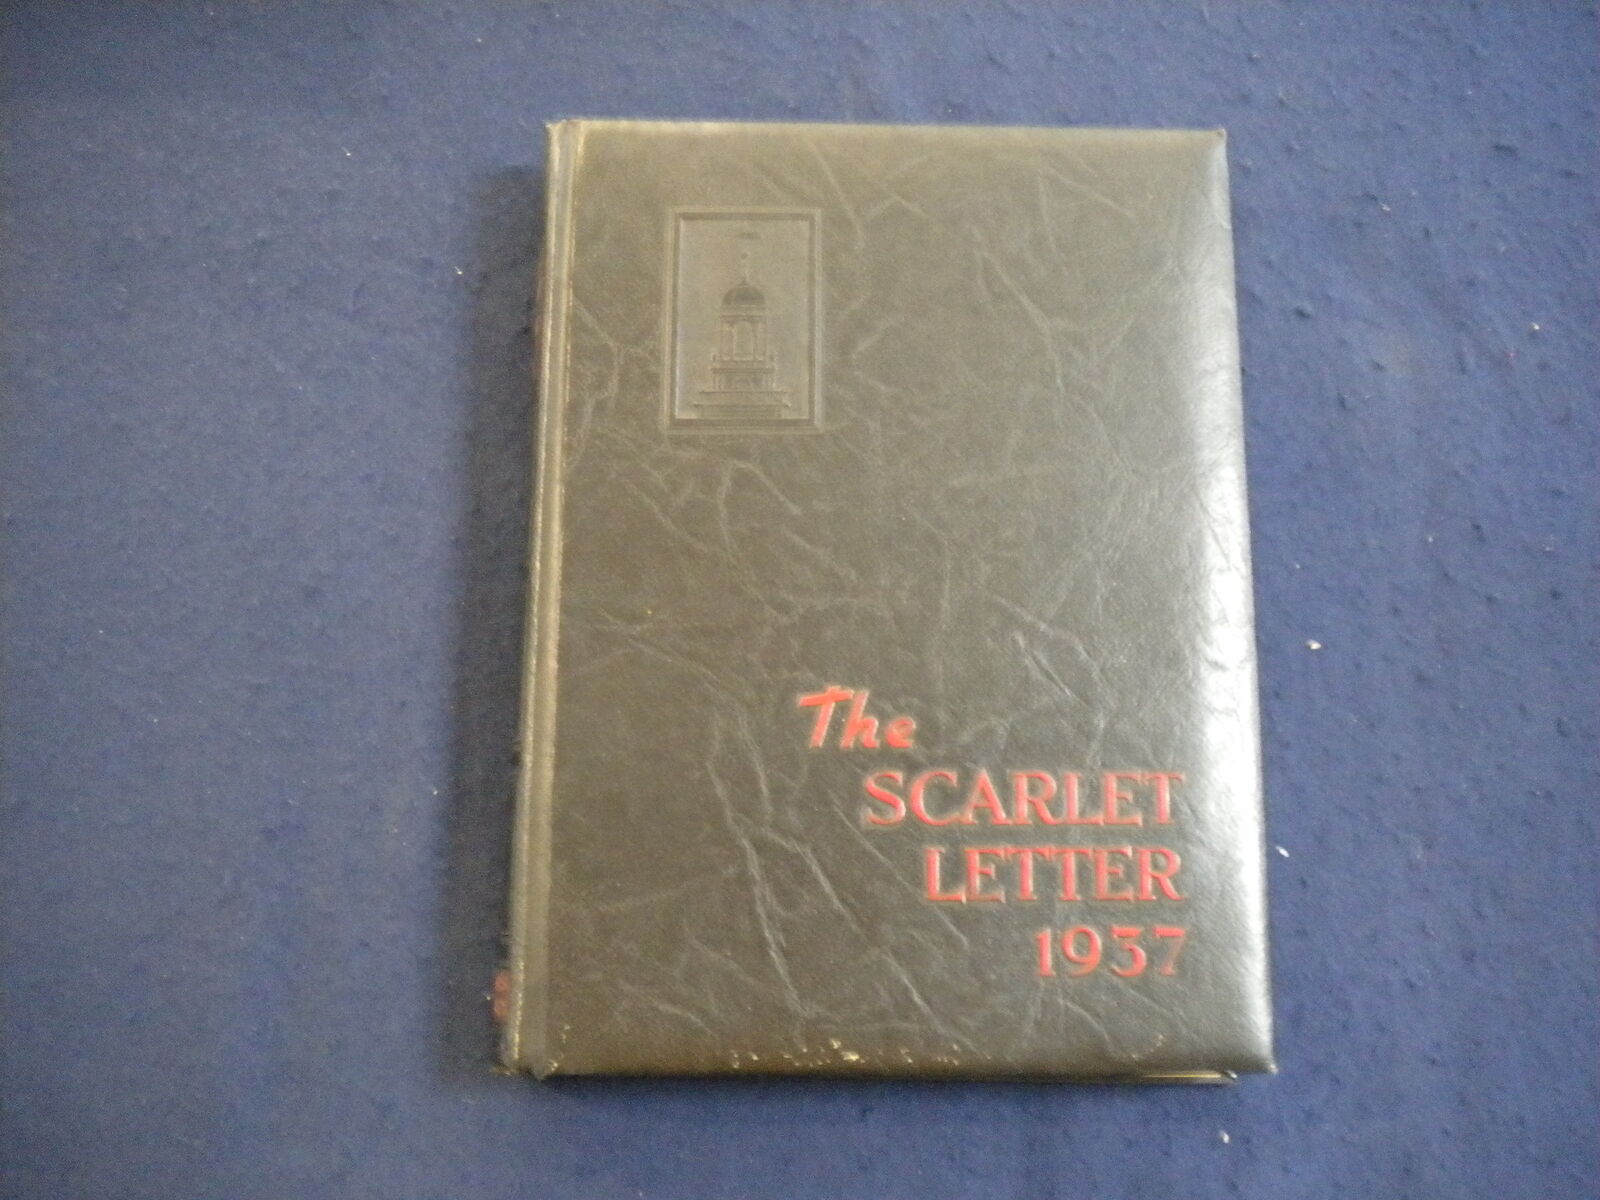 1937 SCARLET LETTER RUTGERS UNIVERSITY YEARBOOK - NEW BRUNSWICK, NJ - YB 2987